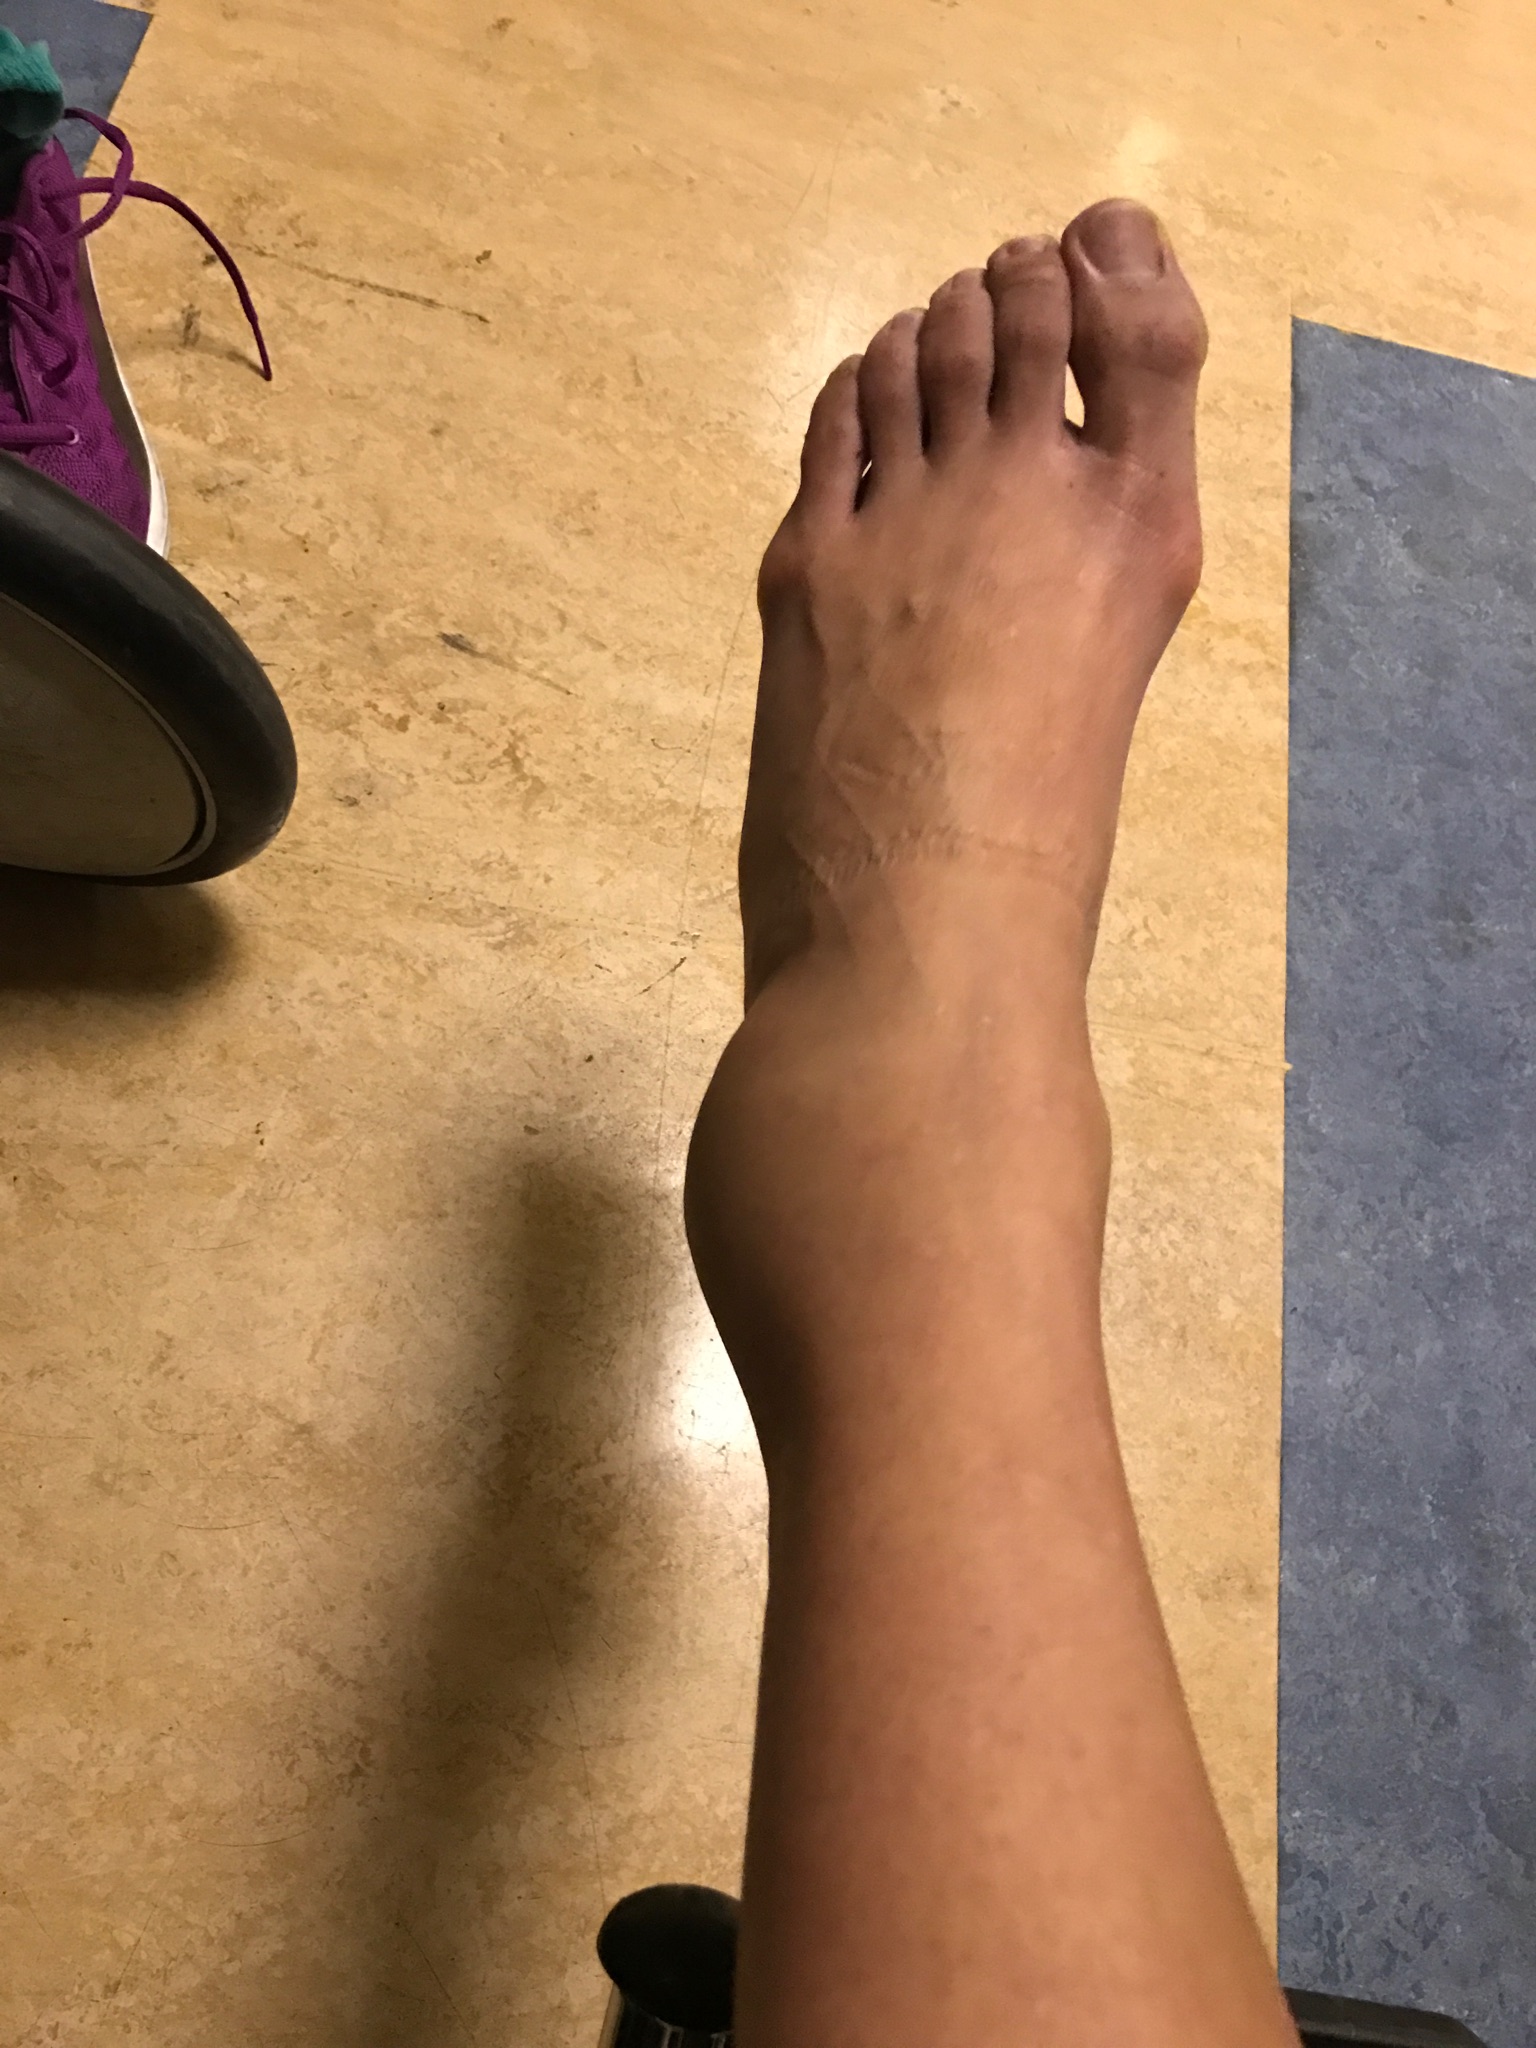 ankle-injury-spiritual-meaning